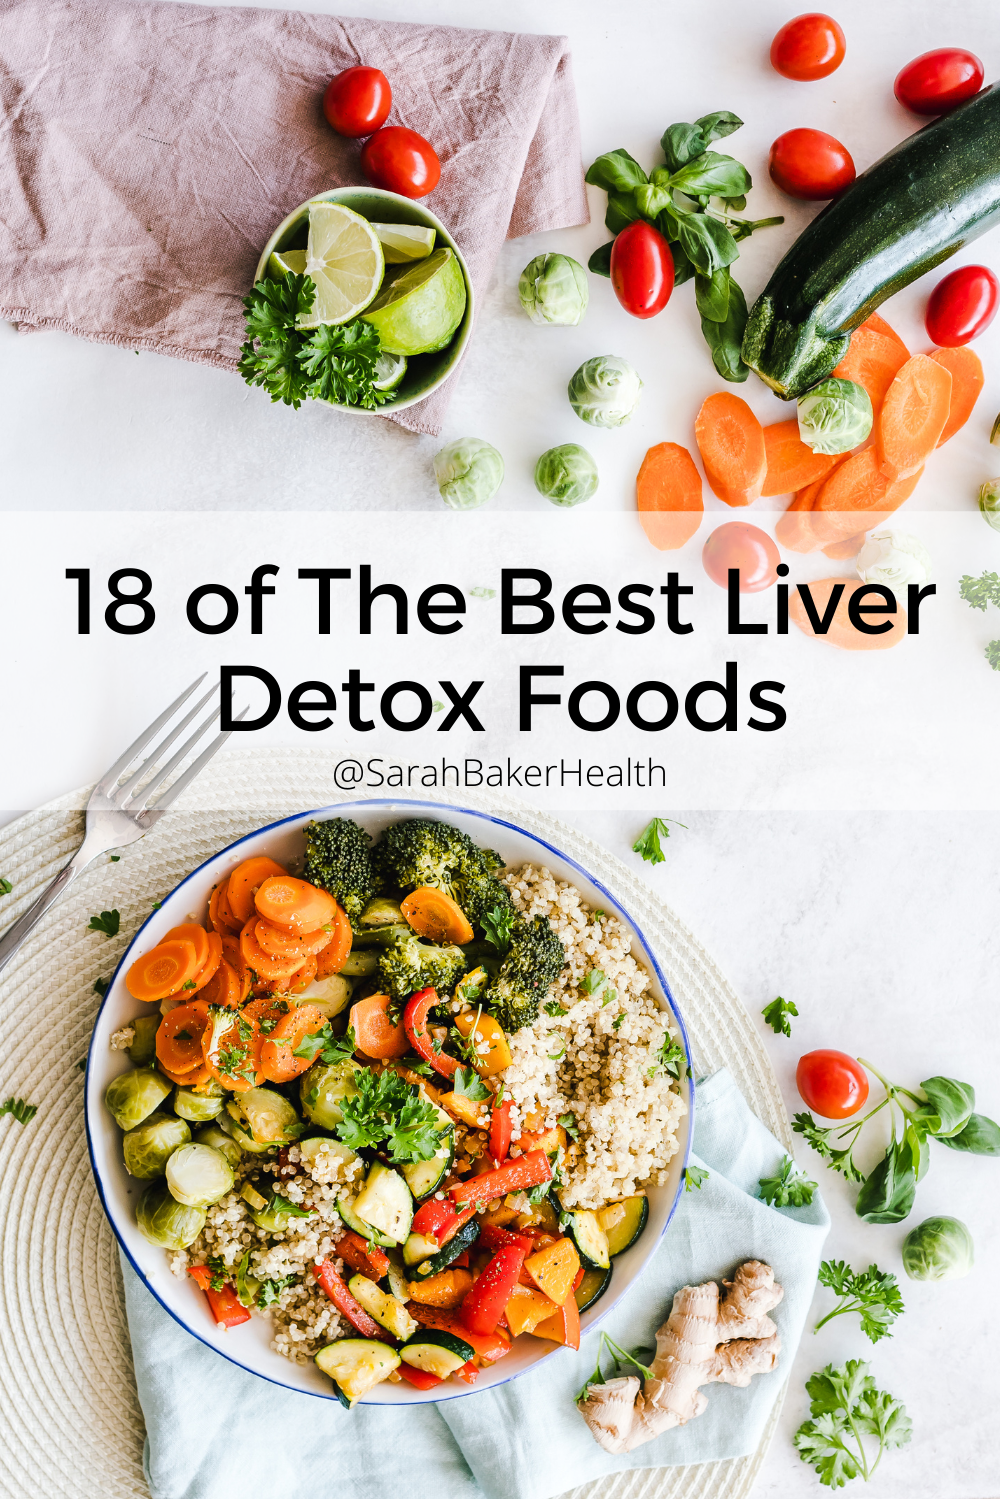 18 of The Best Liver Detox Foods